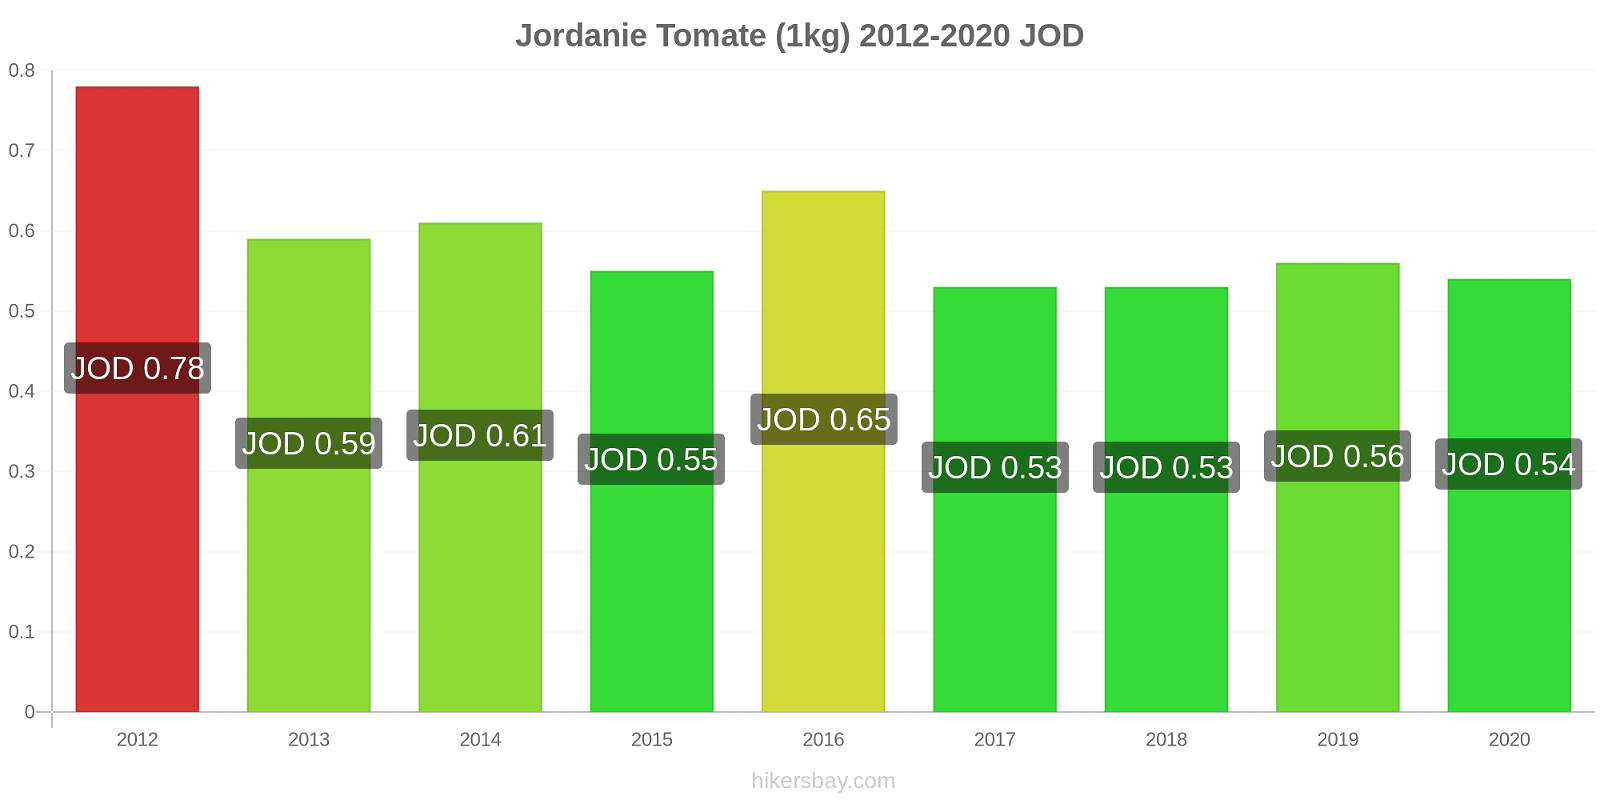 Jordanie changements de prix Tomate (1kg) hikersbay.com